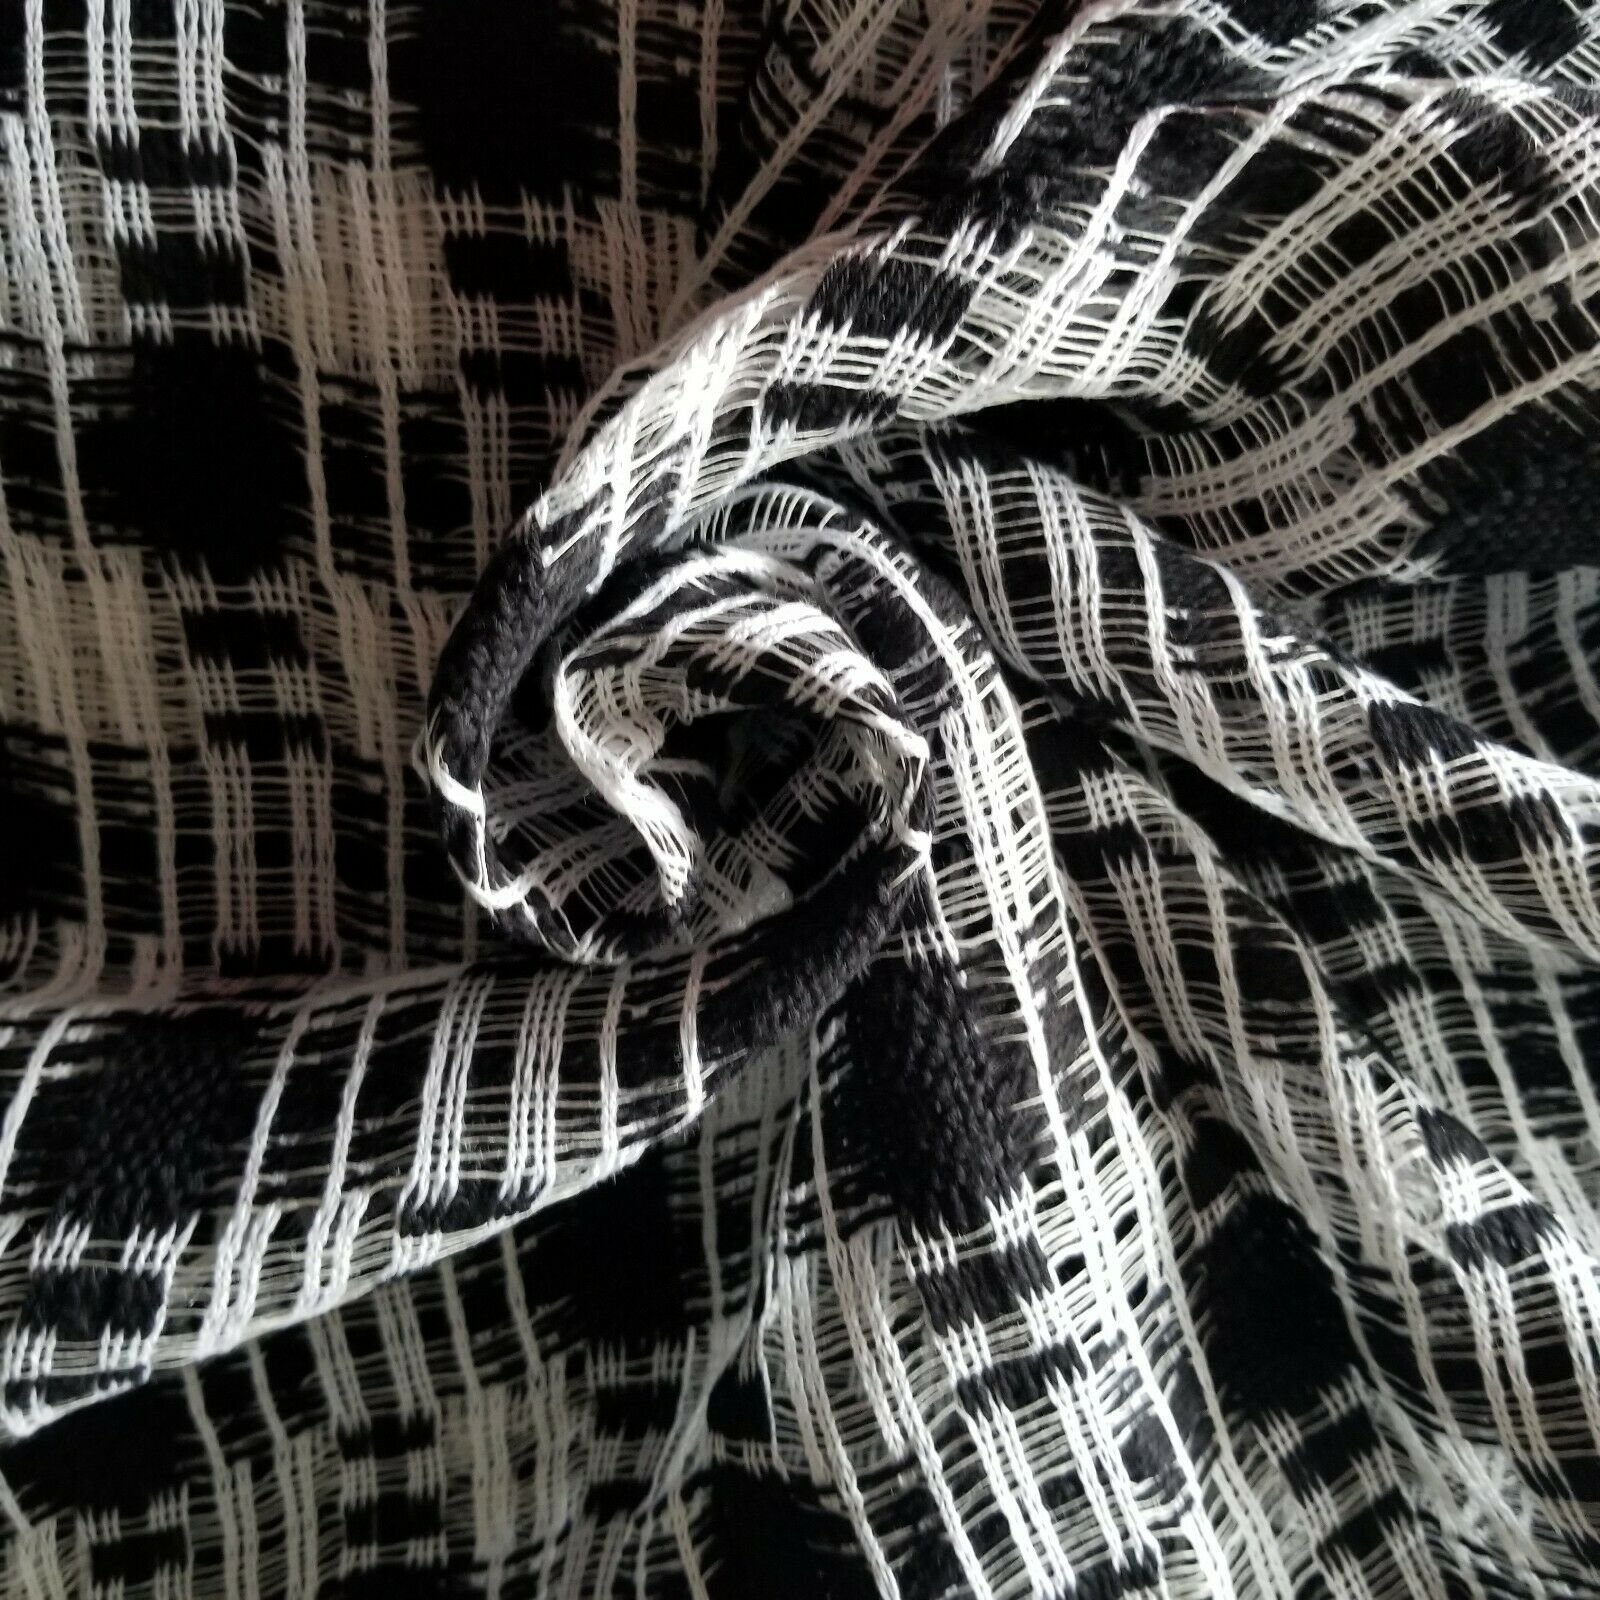 white fishnet fabric